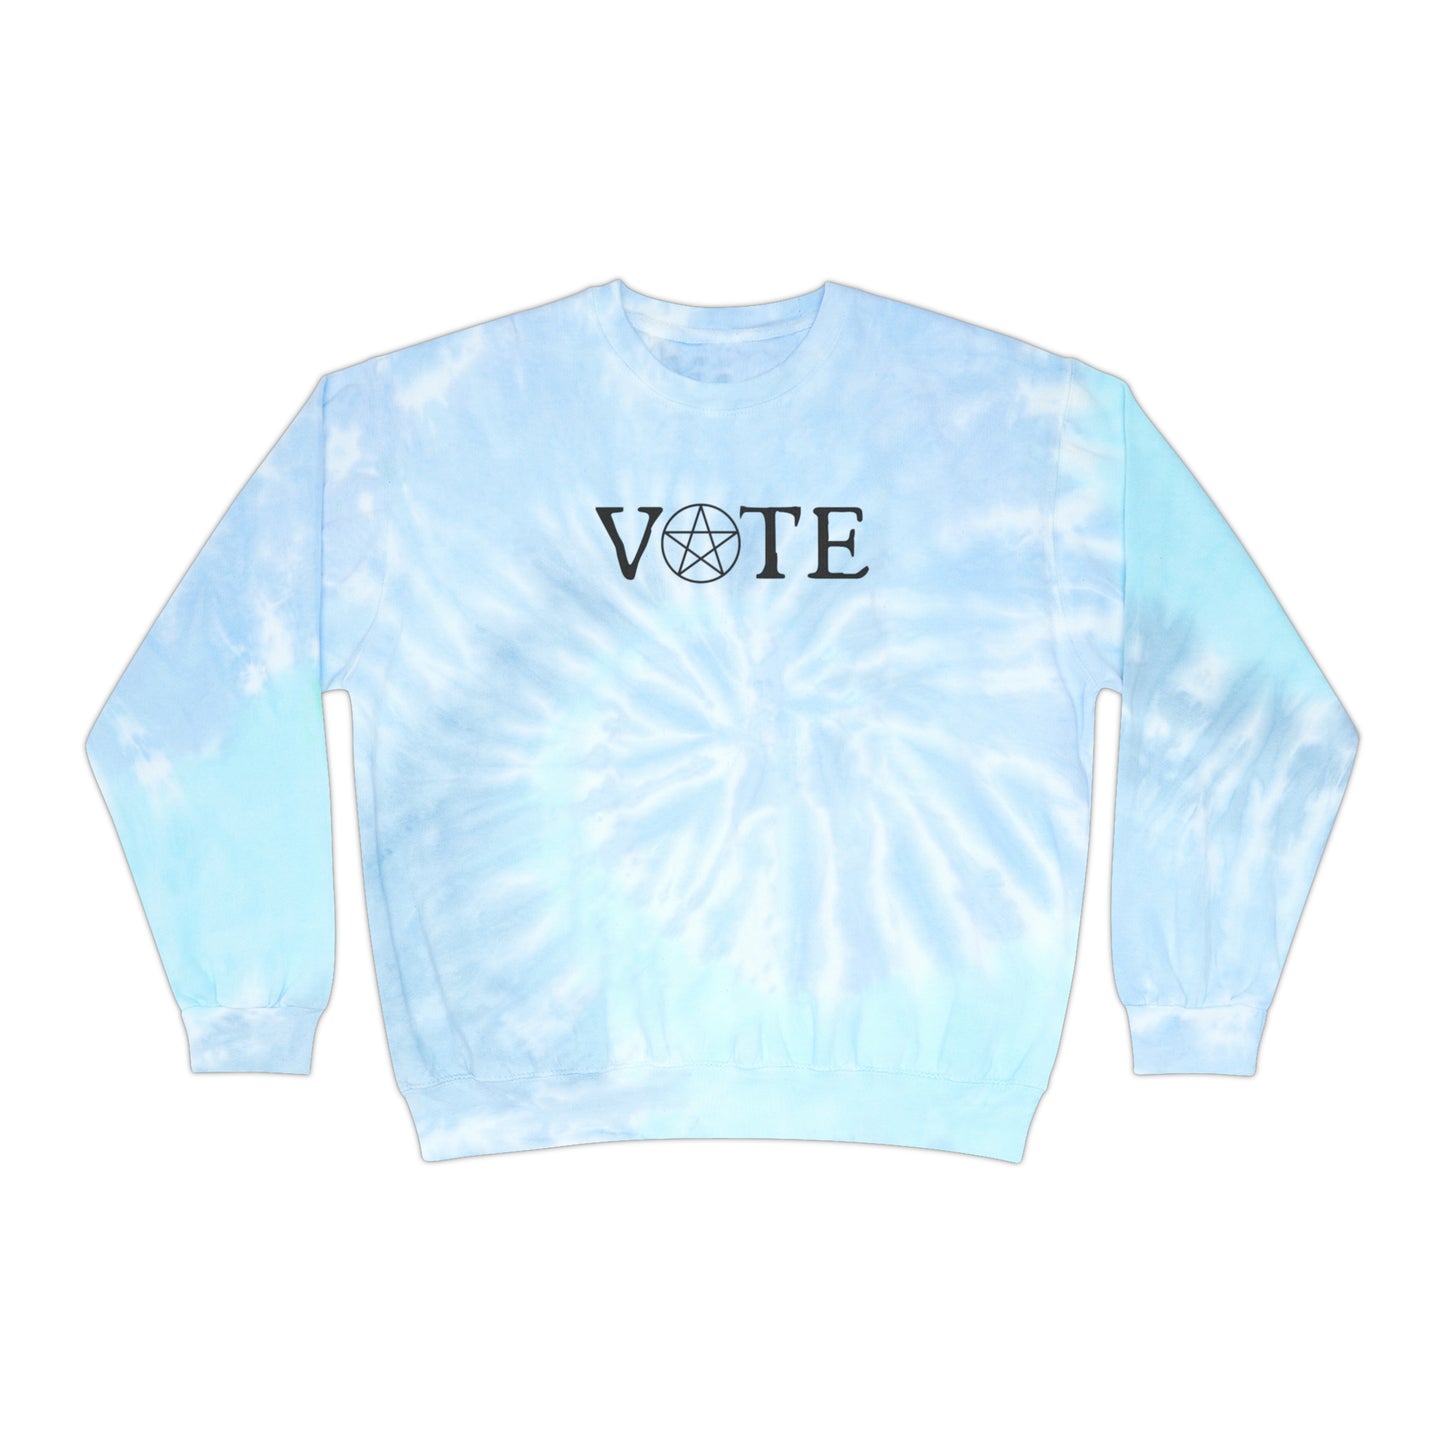 VOTE Tie-Dye Sweatshirt